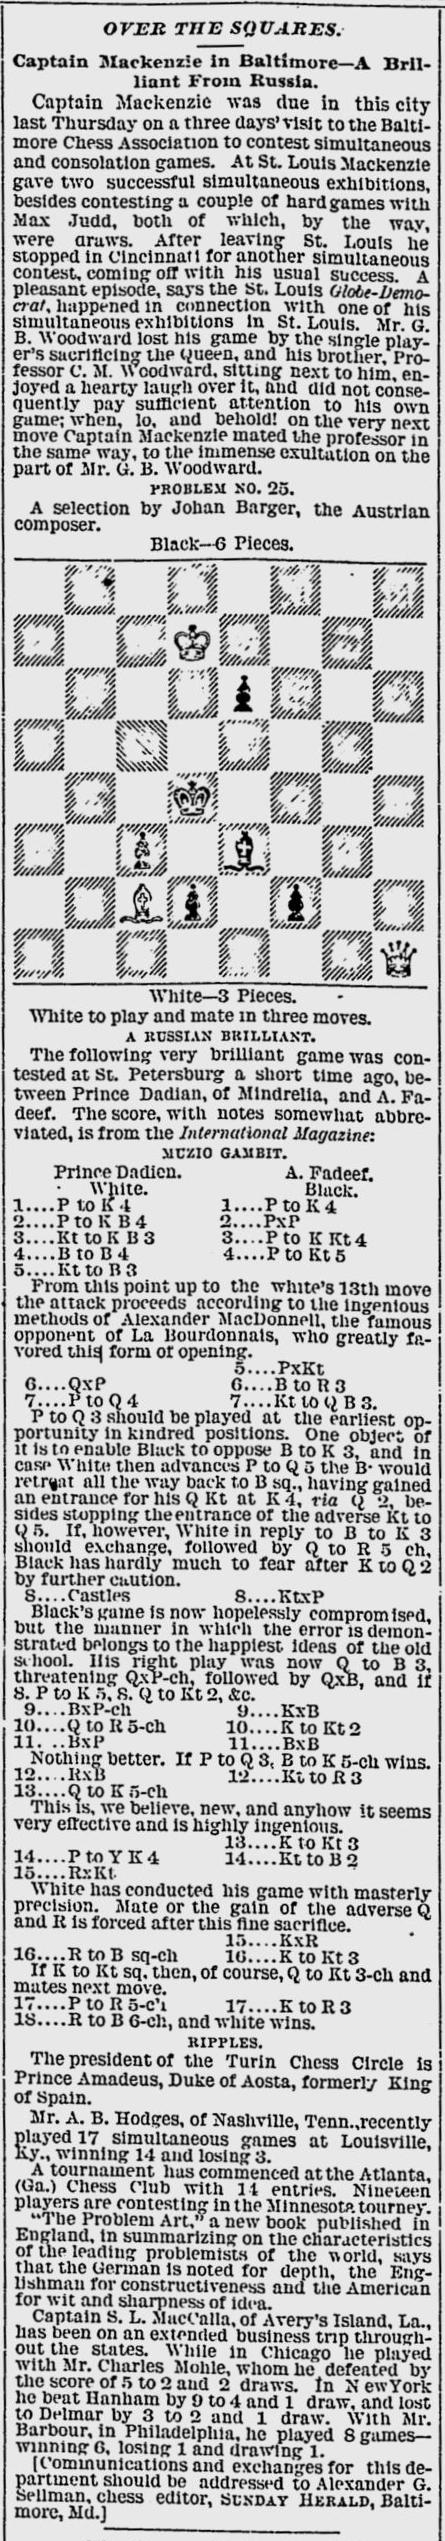 1887.04.29-01 Baltimore Weekly Herald.jpg